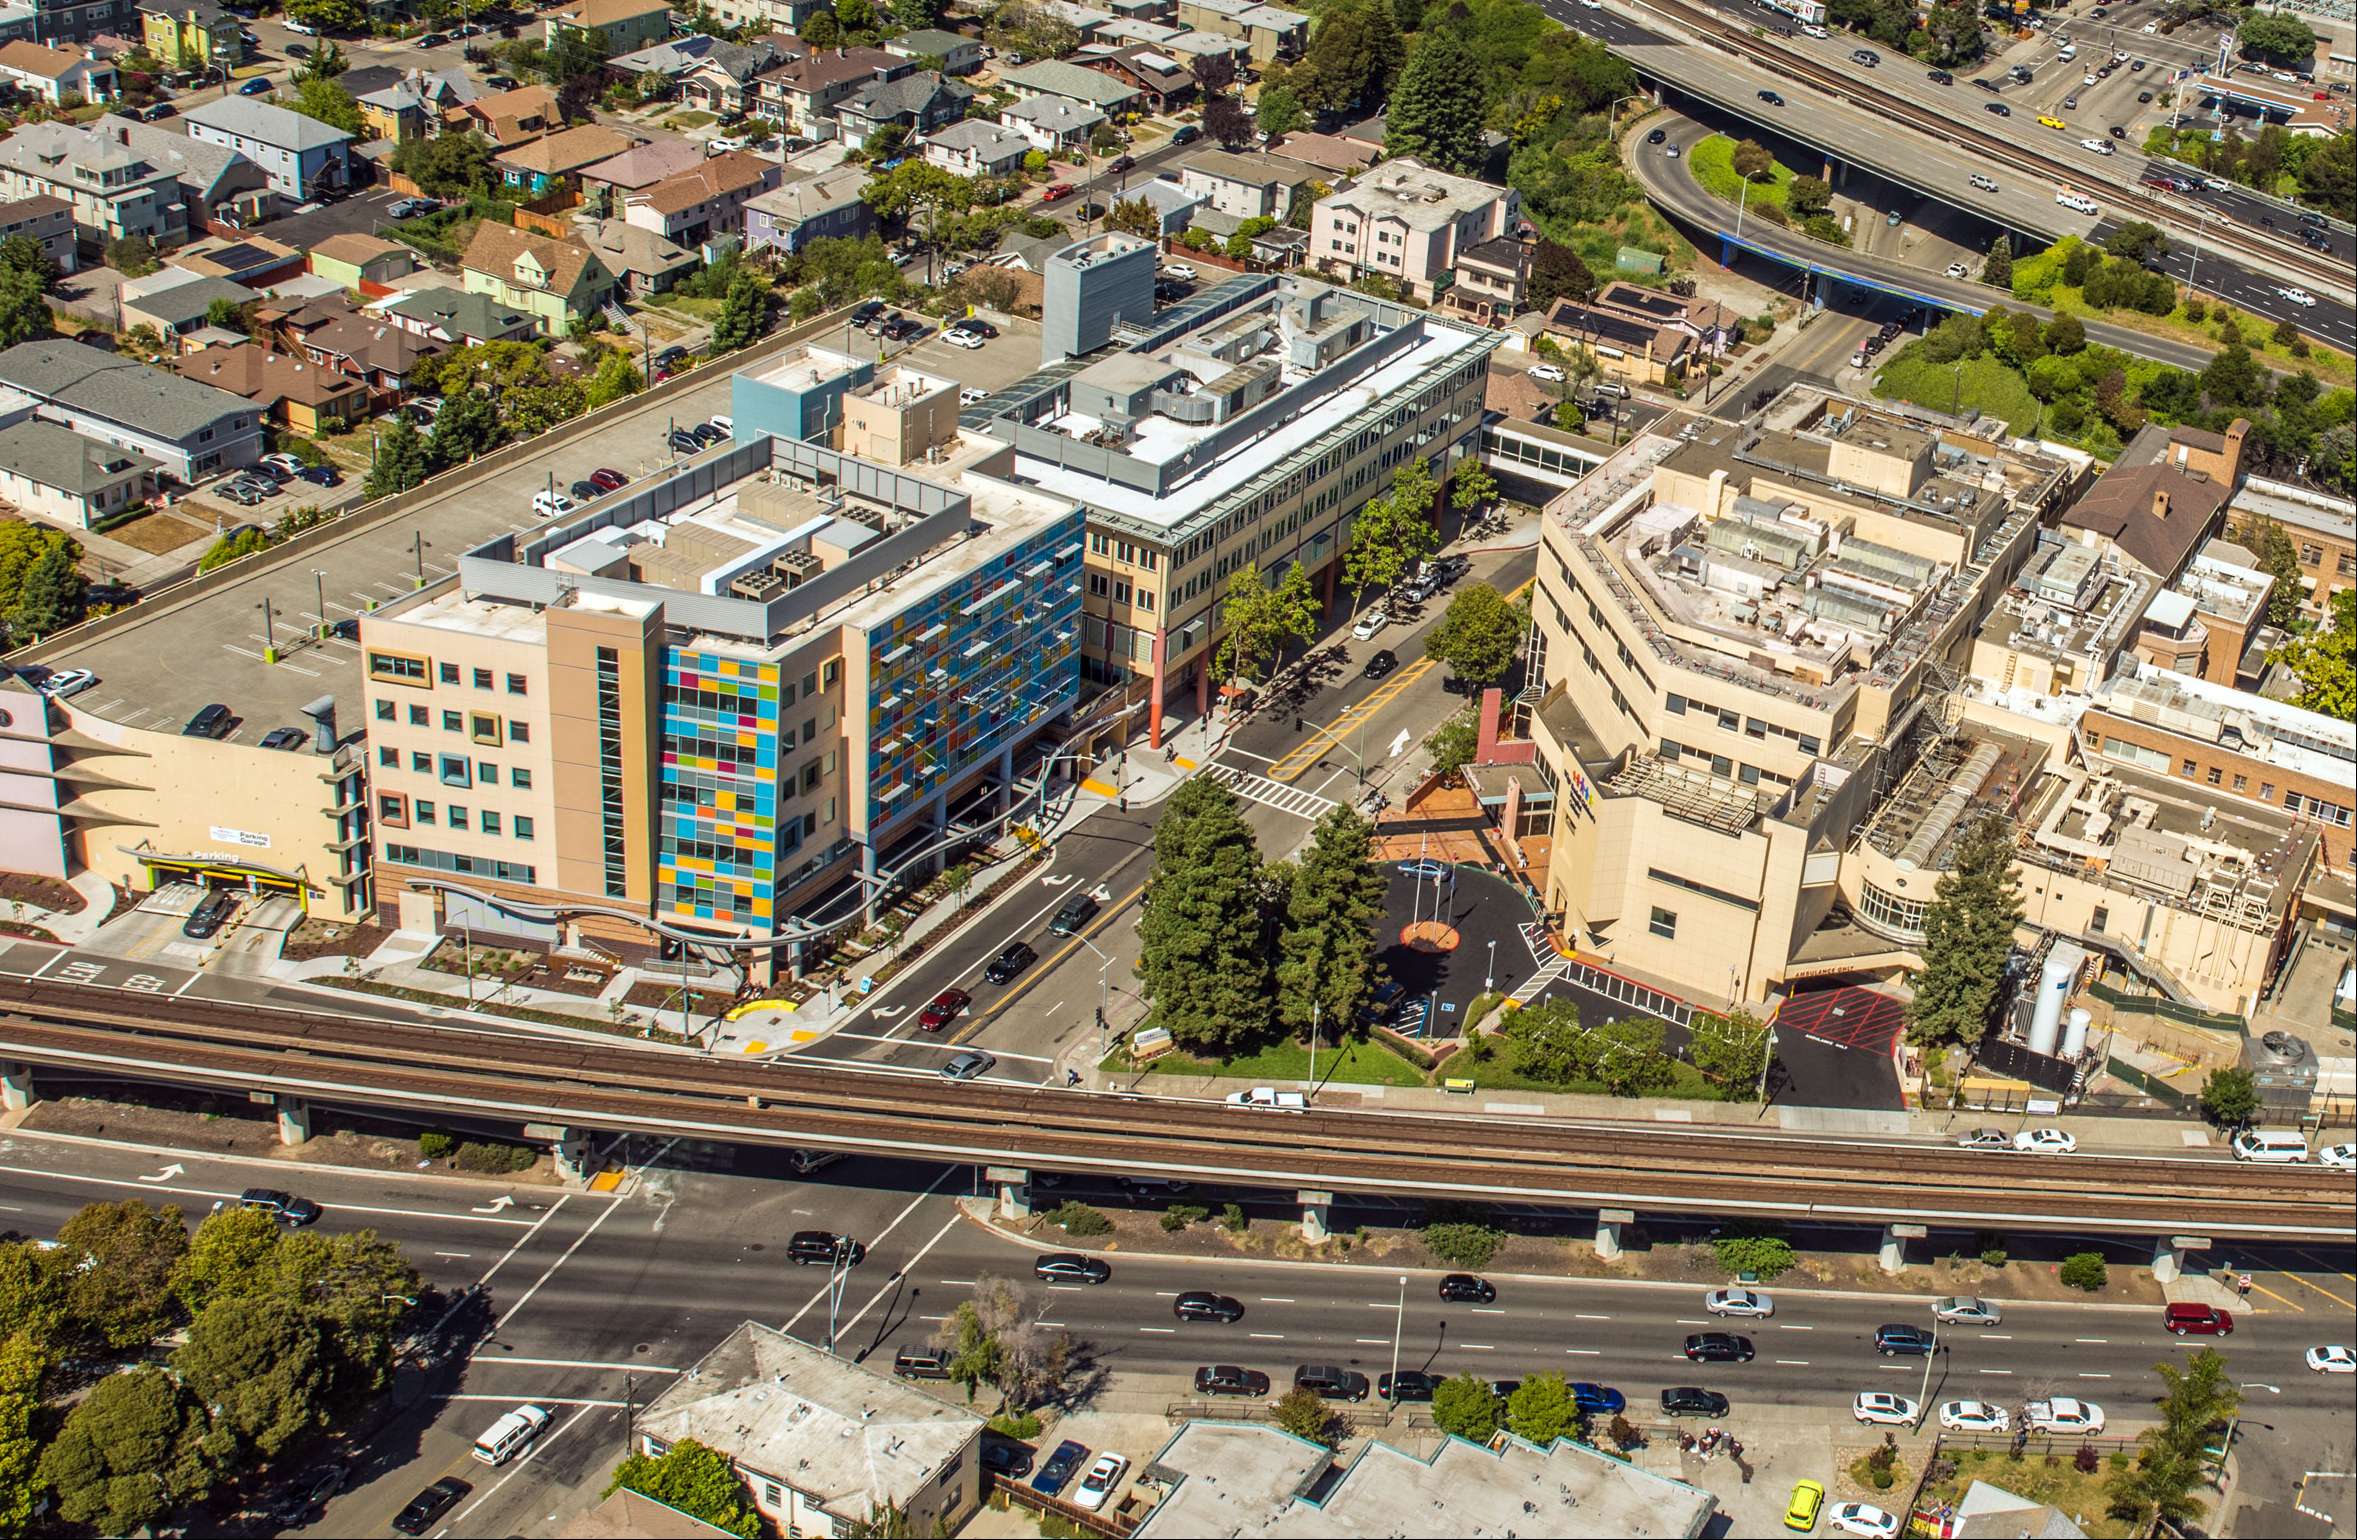 UCSF Benioff Children’s Hospital - Oakland